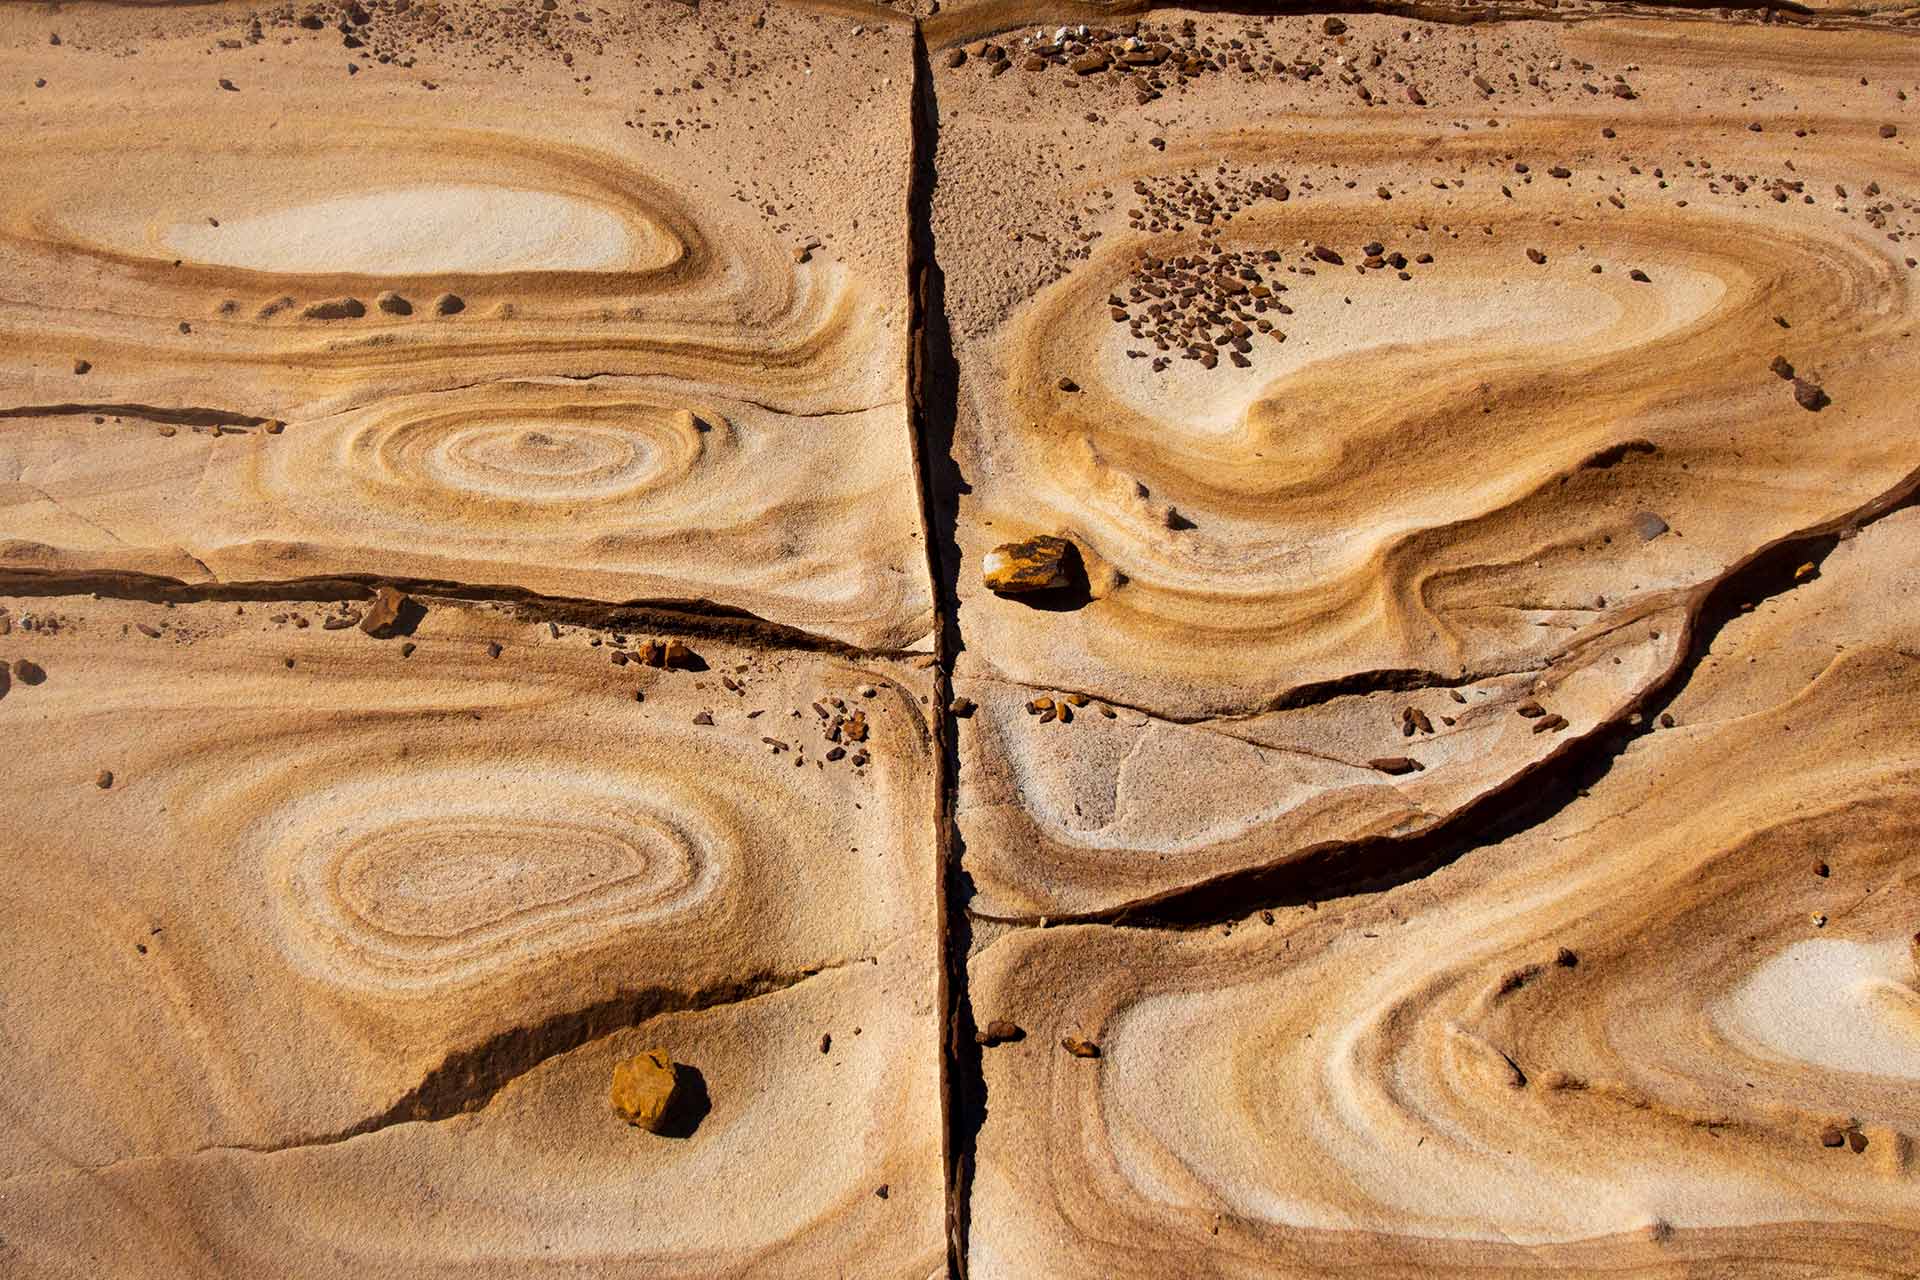 Image of sandstone bouddi national park Australia